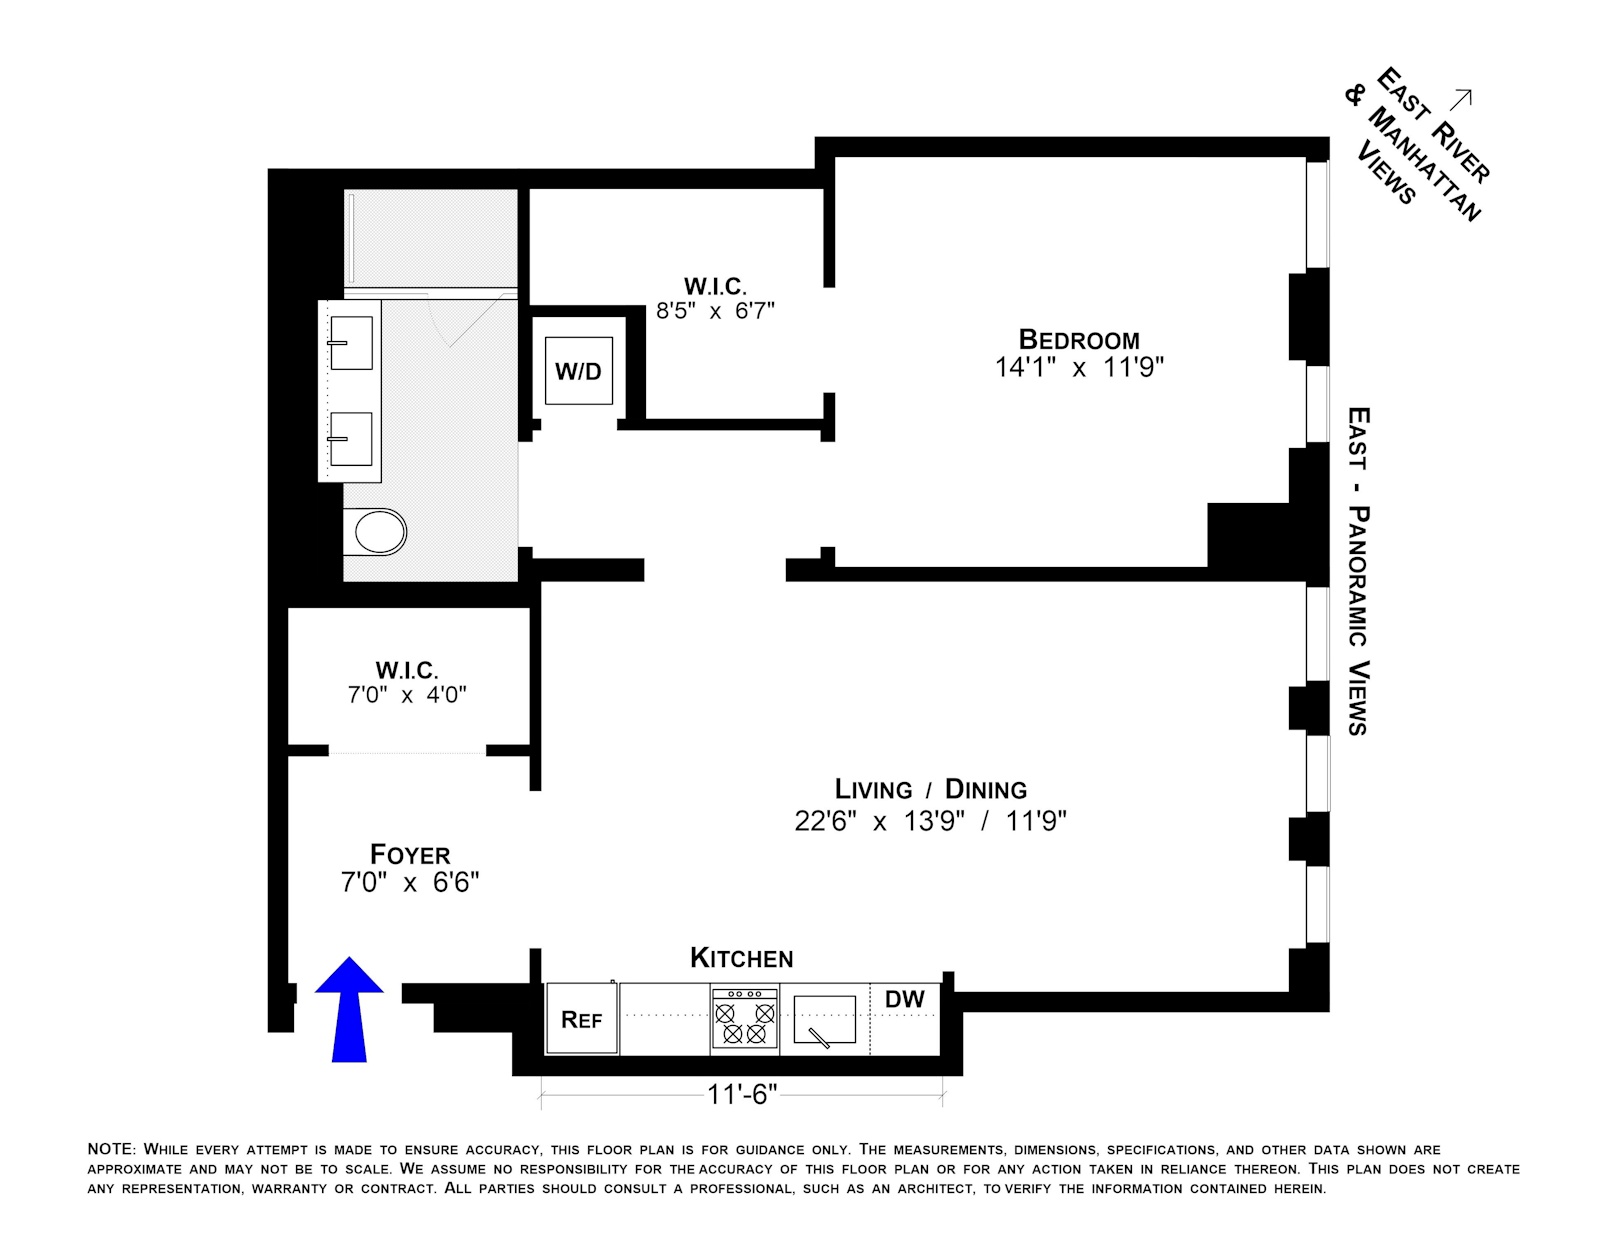 Floorplan for 9 Dekalb Avenue, 55D